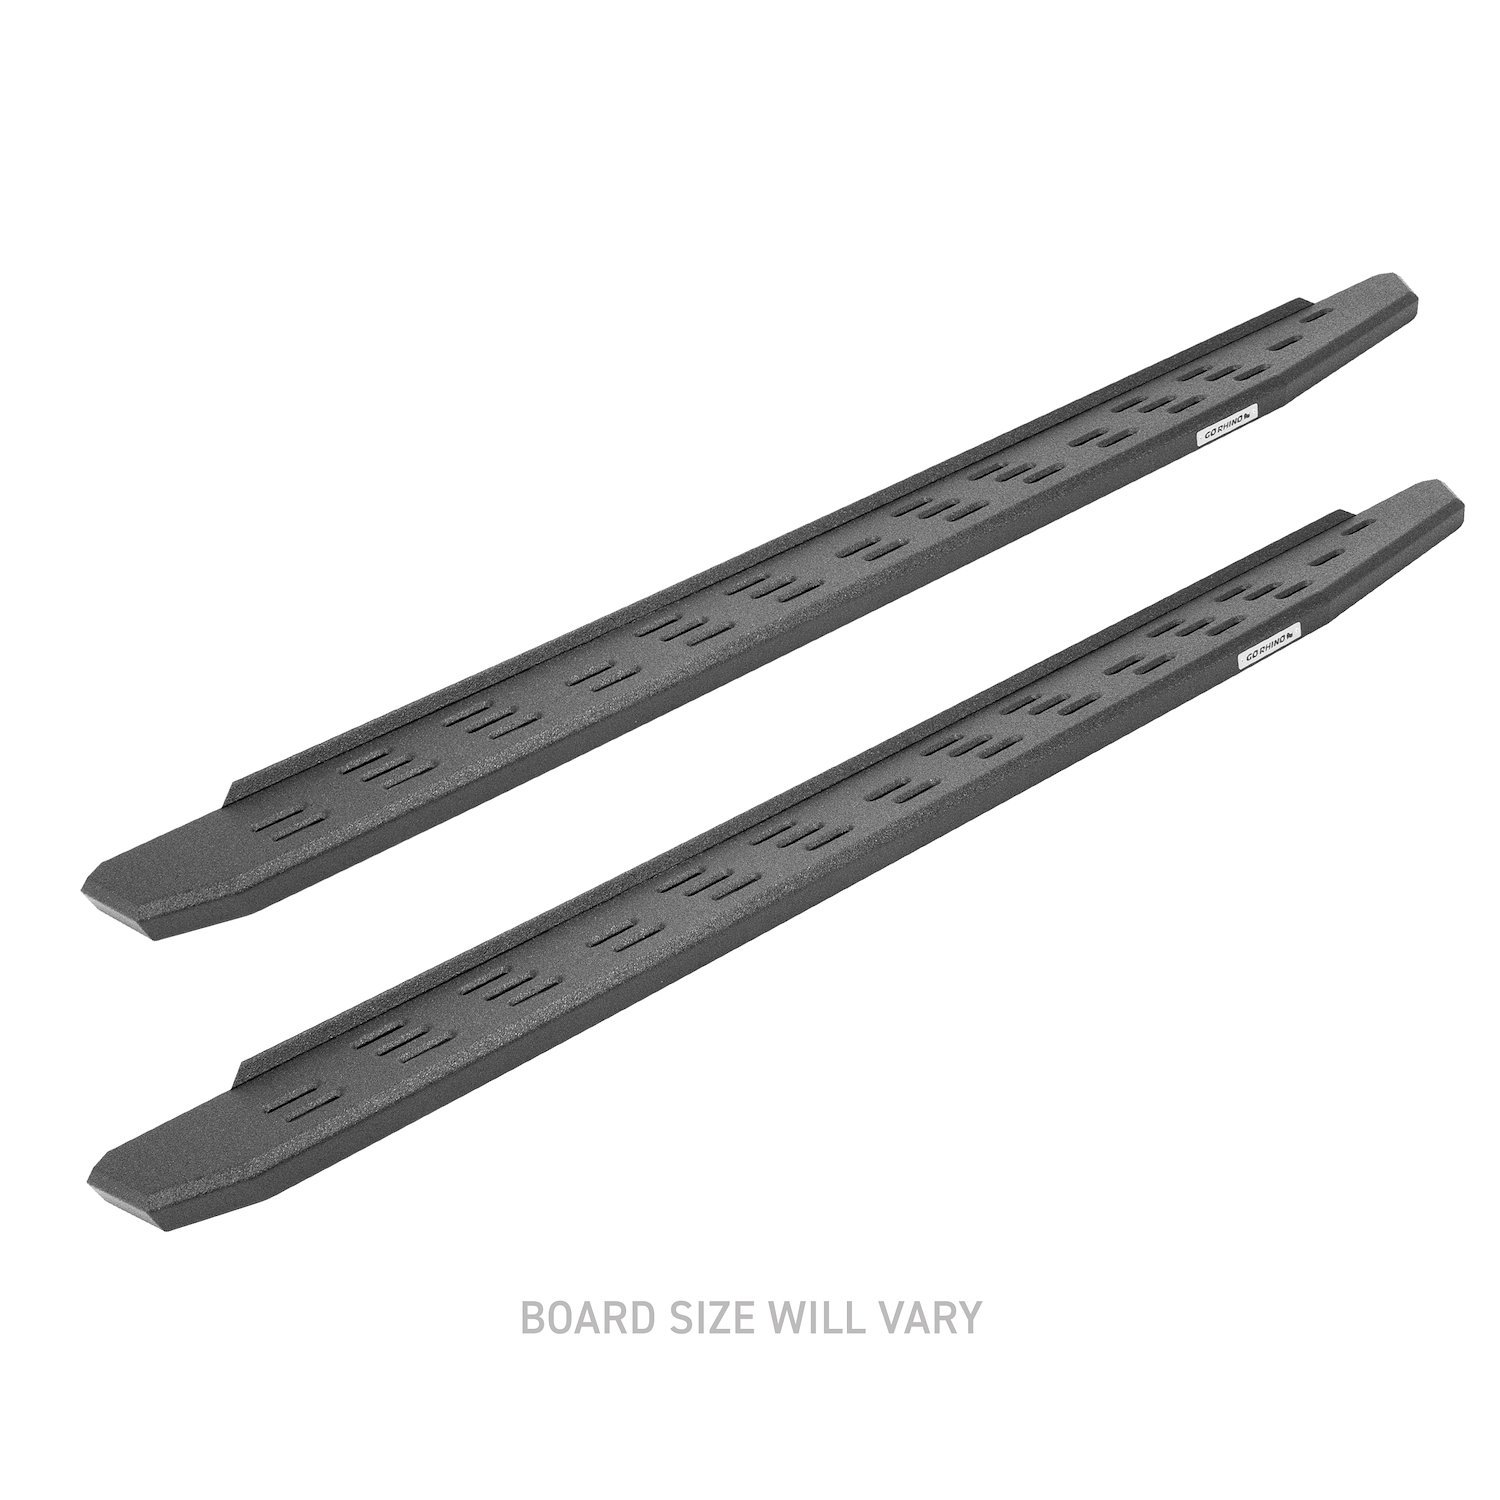 RB30 Running Boards w/Bracket Kit Fits Select GM Silverado, Sierra 1500/2500/3500 HD Double Cab [Bedliner-Coated]